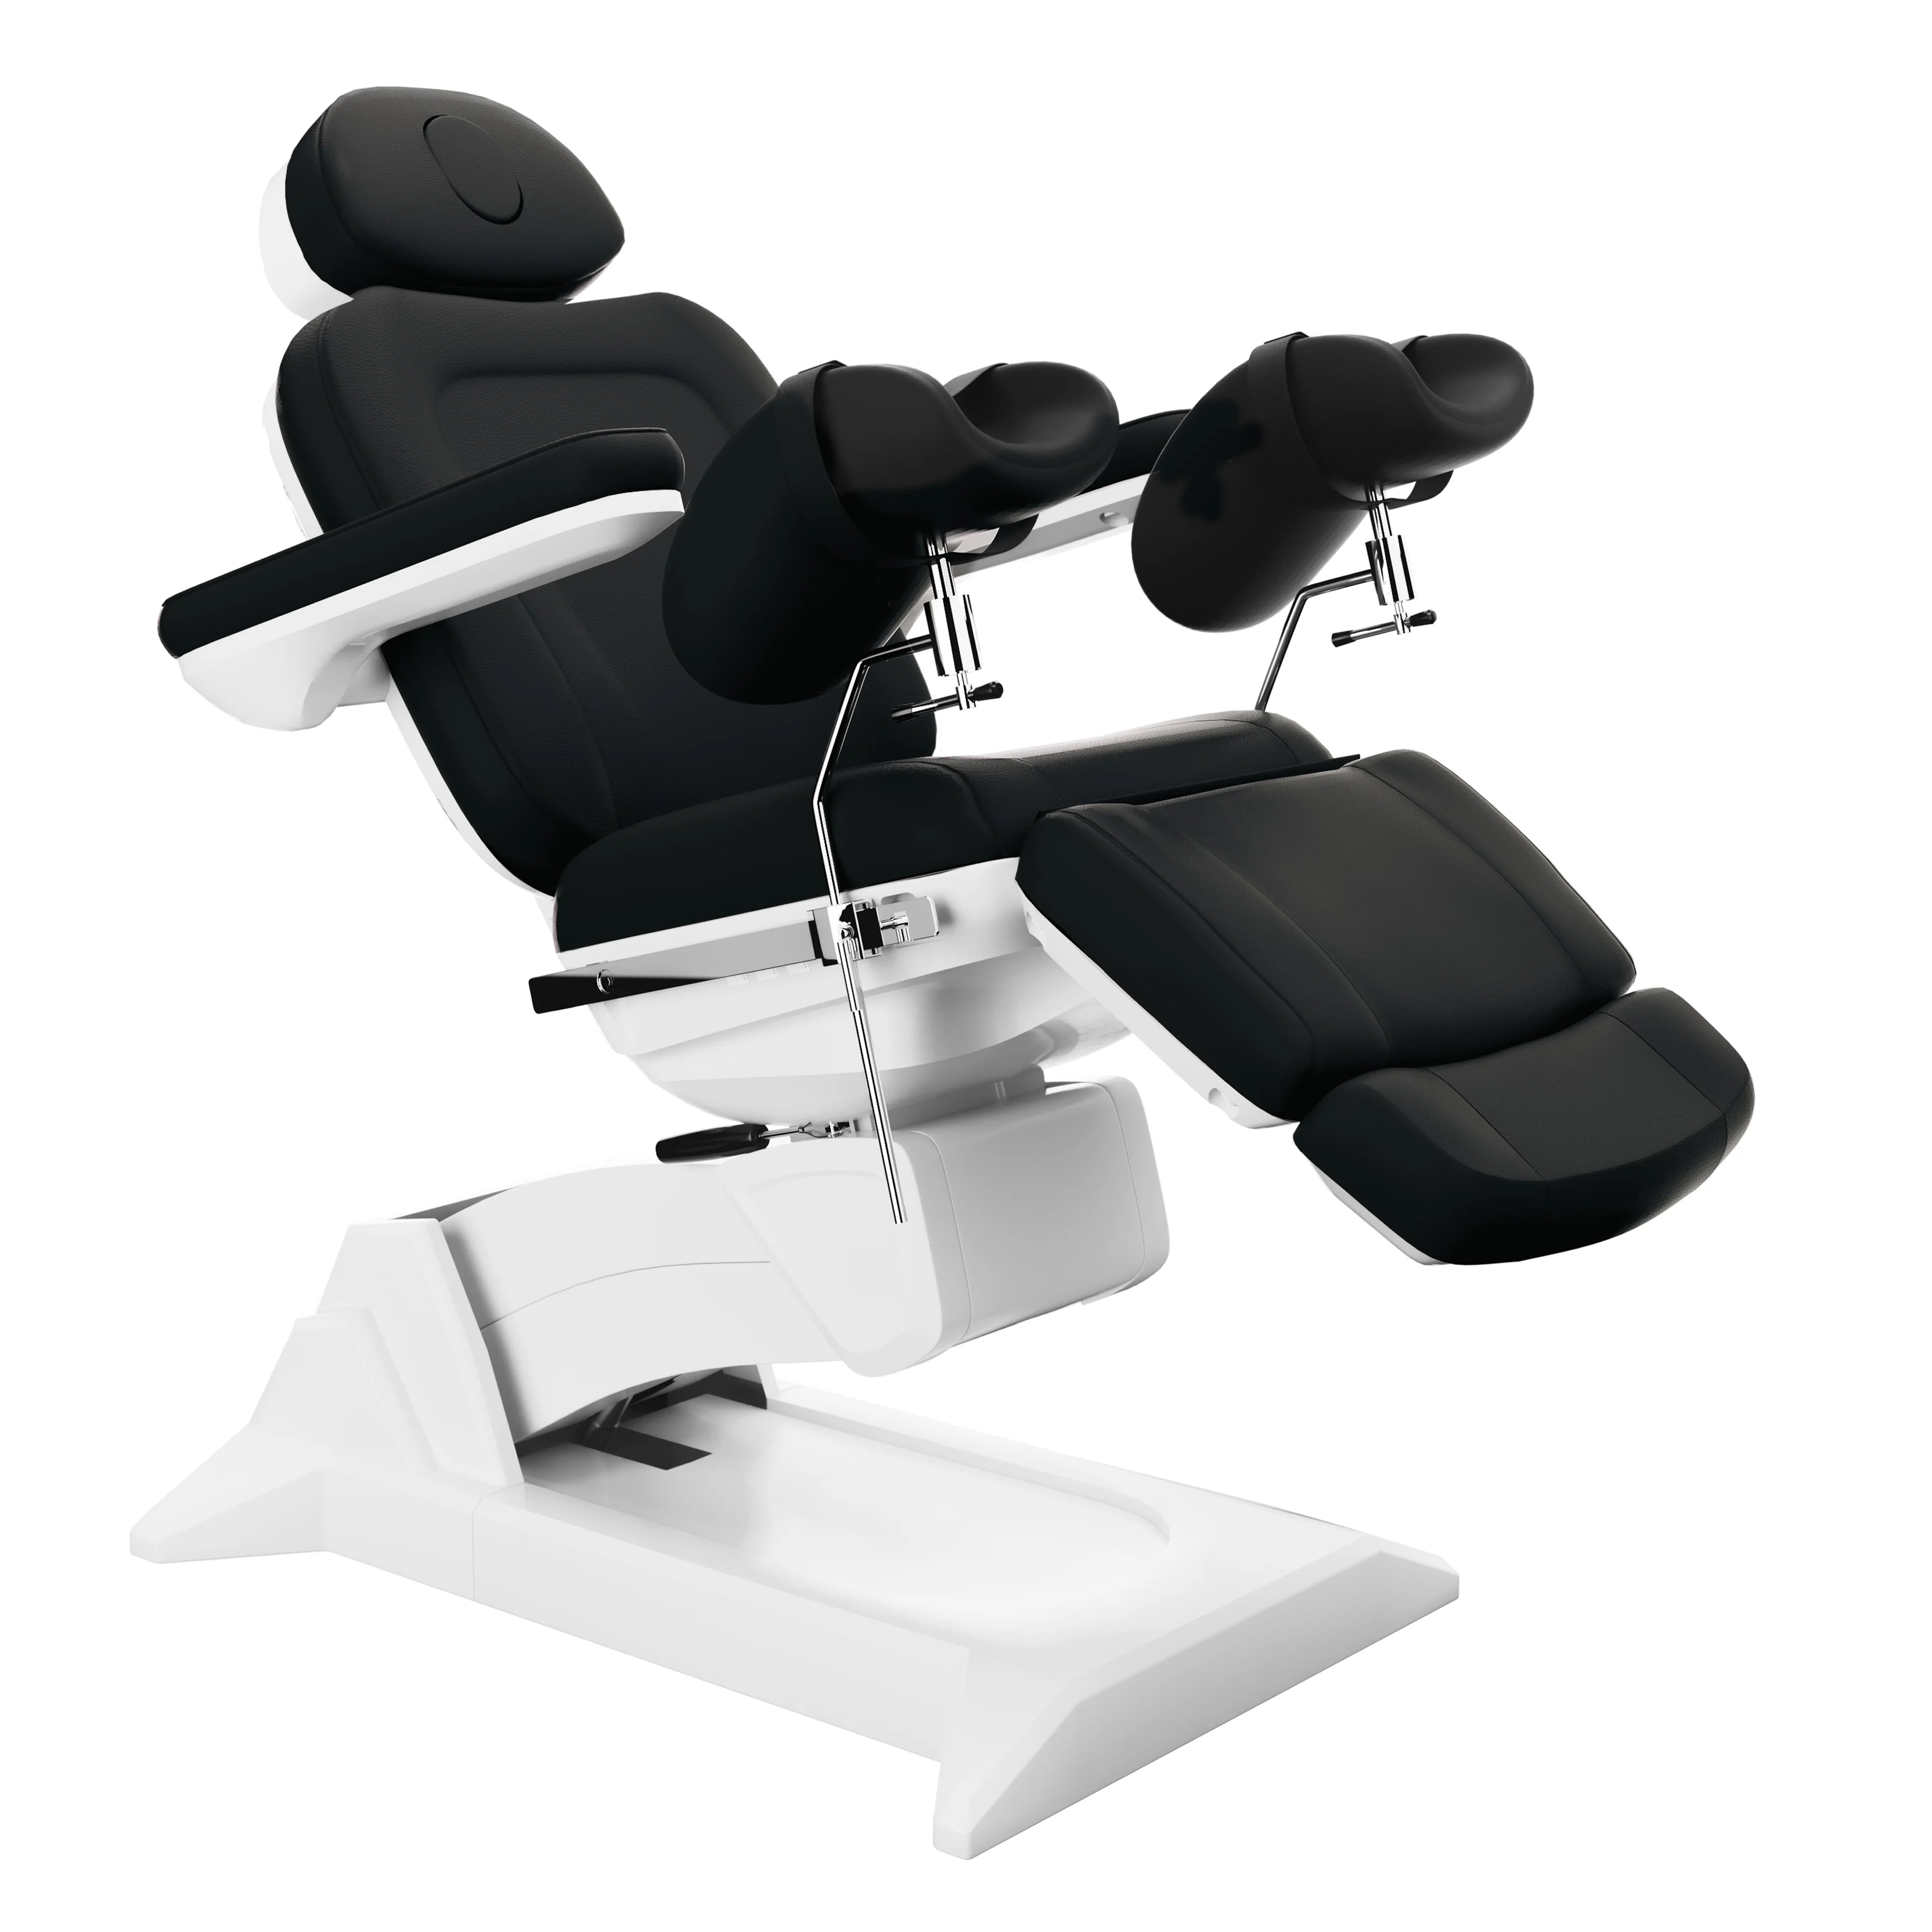 SpaMarc . Ultera (Black) . OBGYN & Gynecology . Rotating . 4 Motor Spa Treatment Chair/Bed